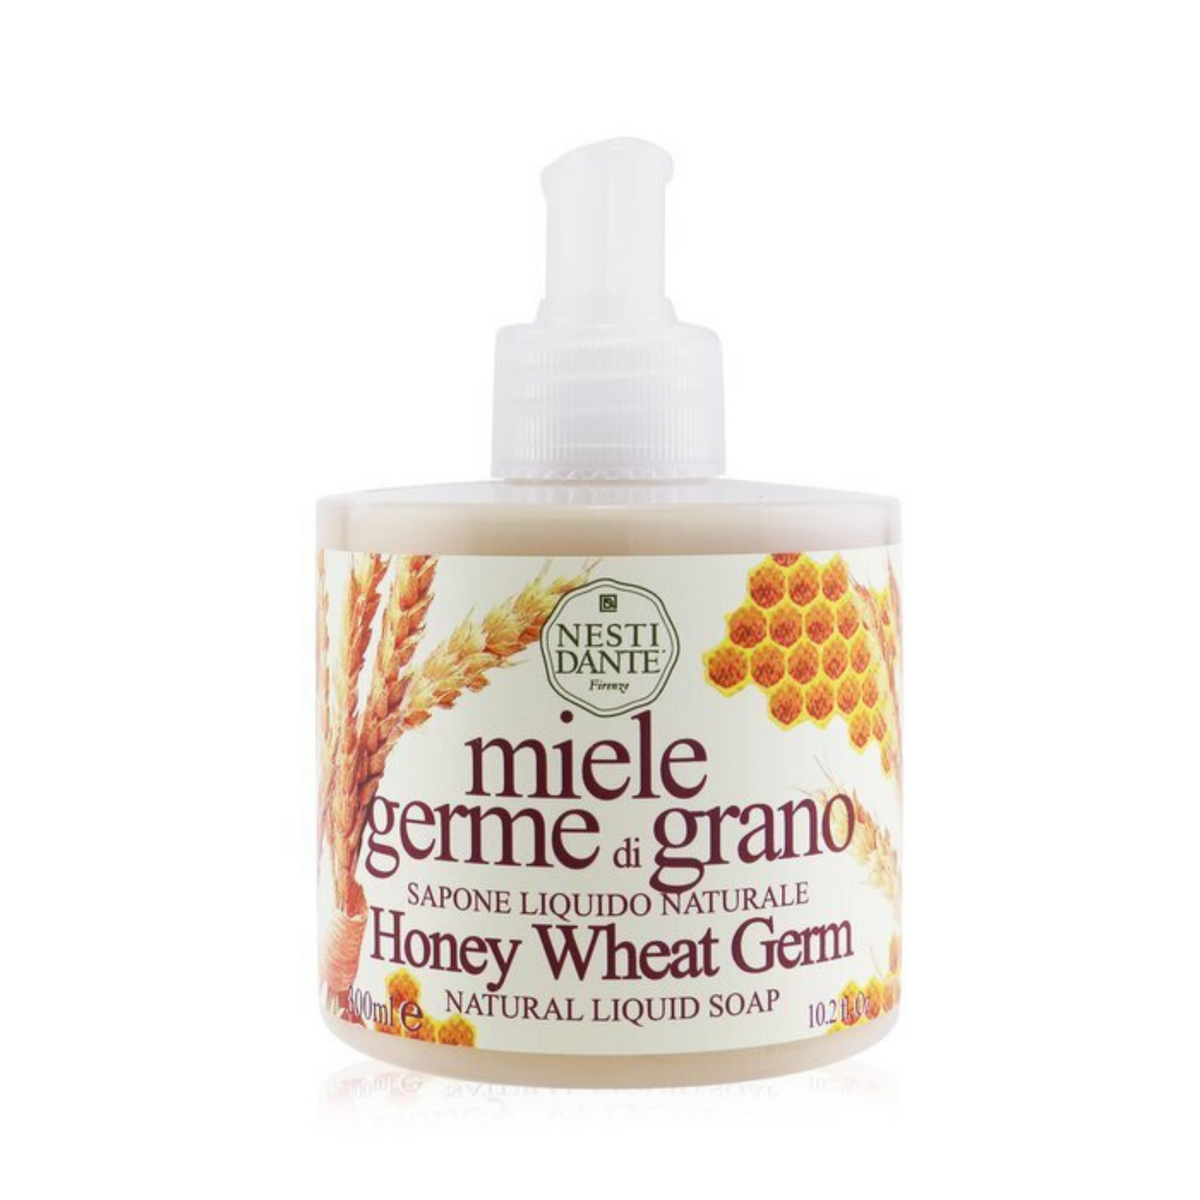 Primary Image of Honey Wheat Germ Liquid Soap